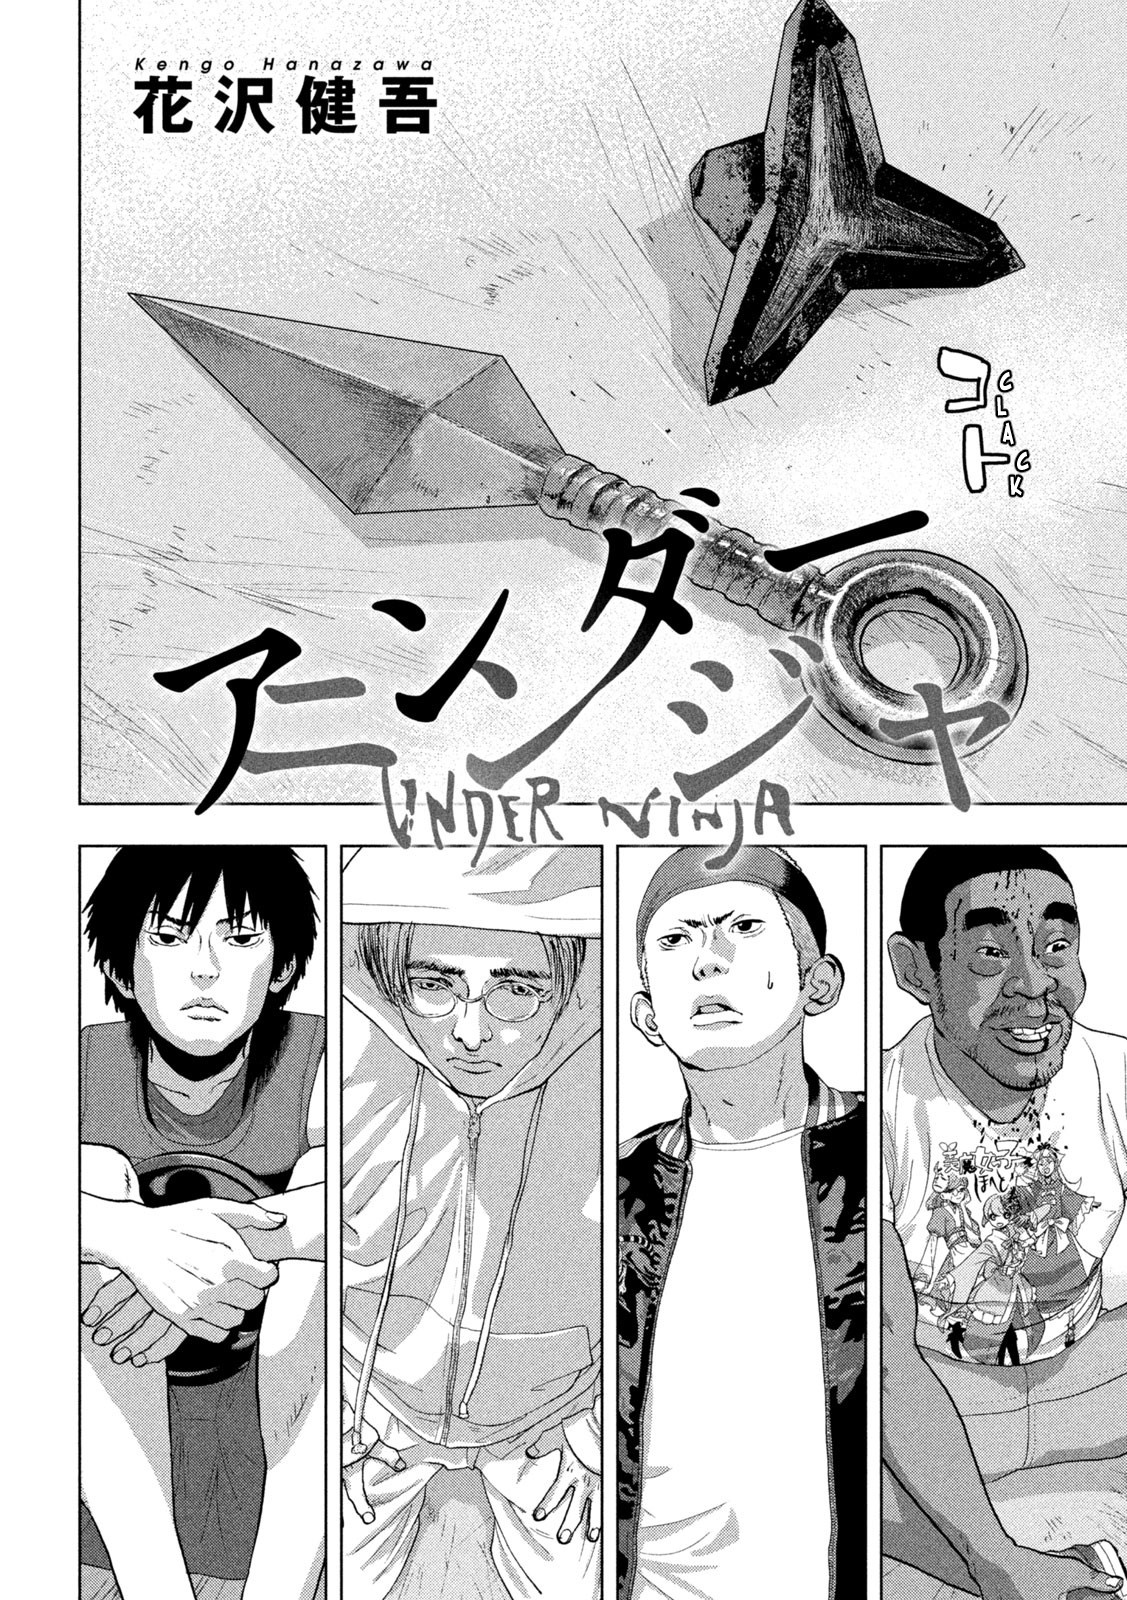 Under Ninja - Page 2